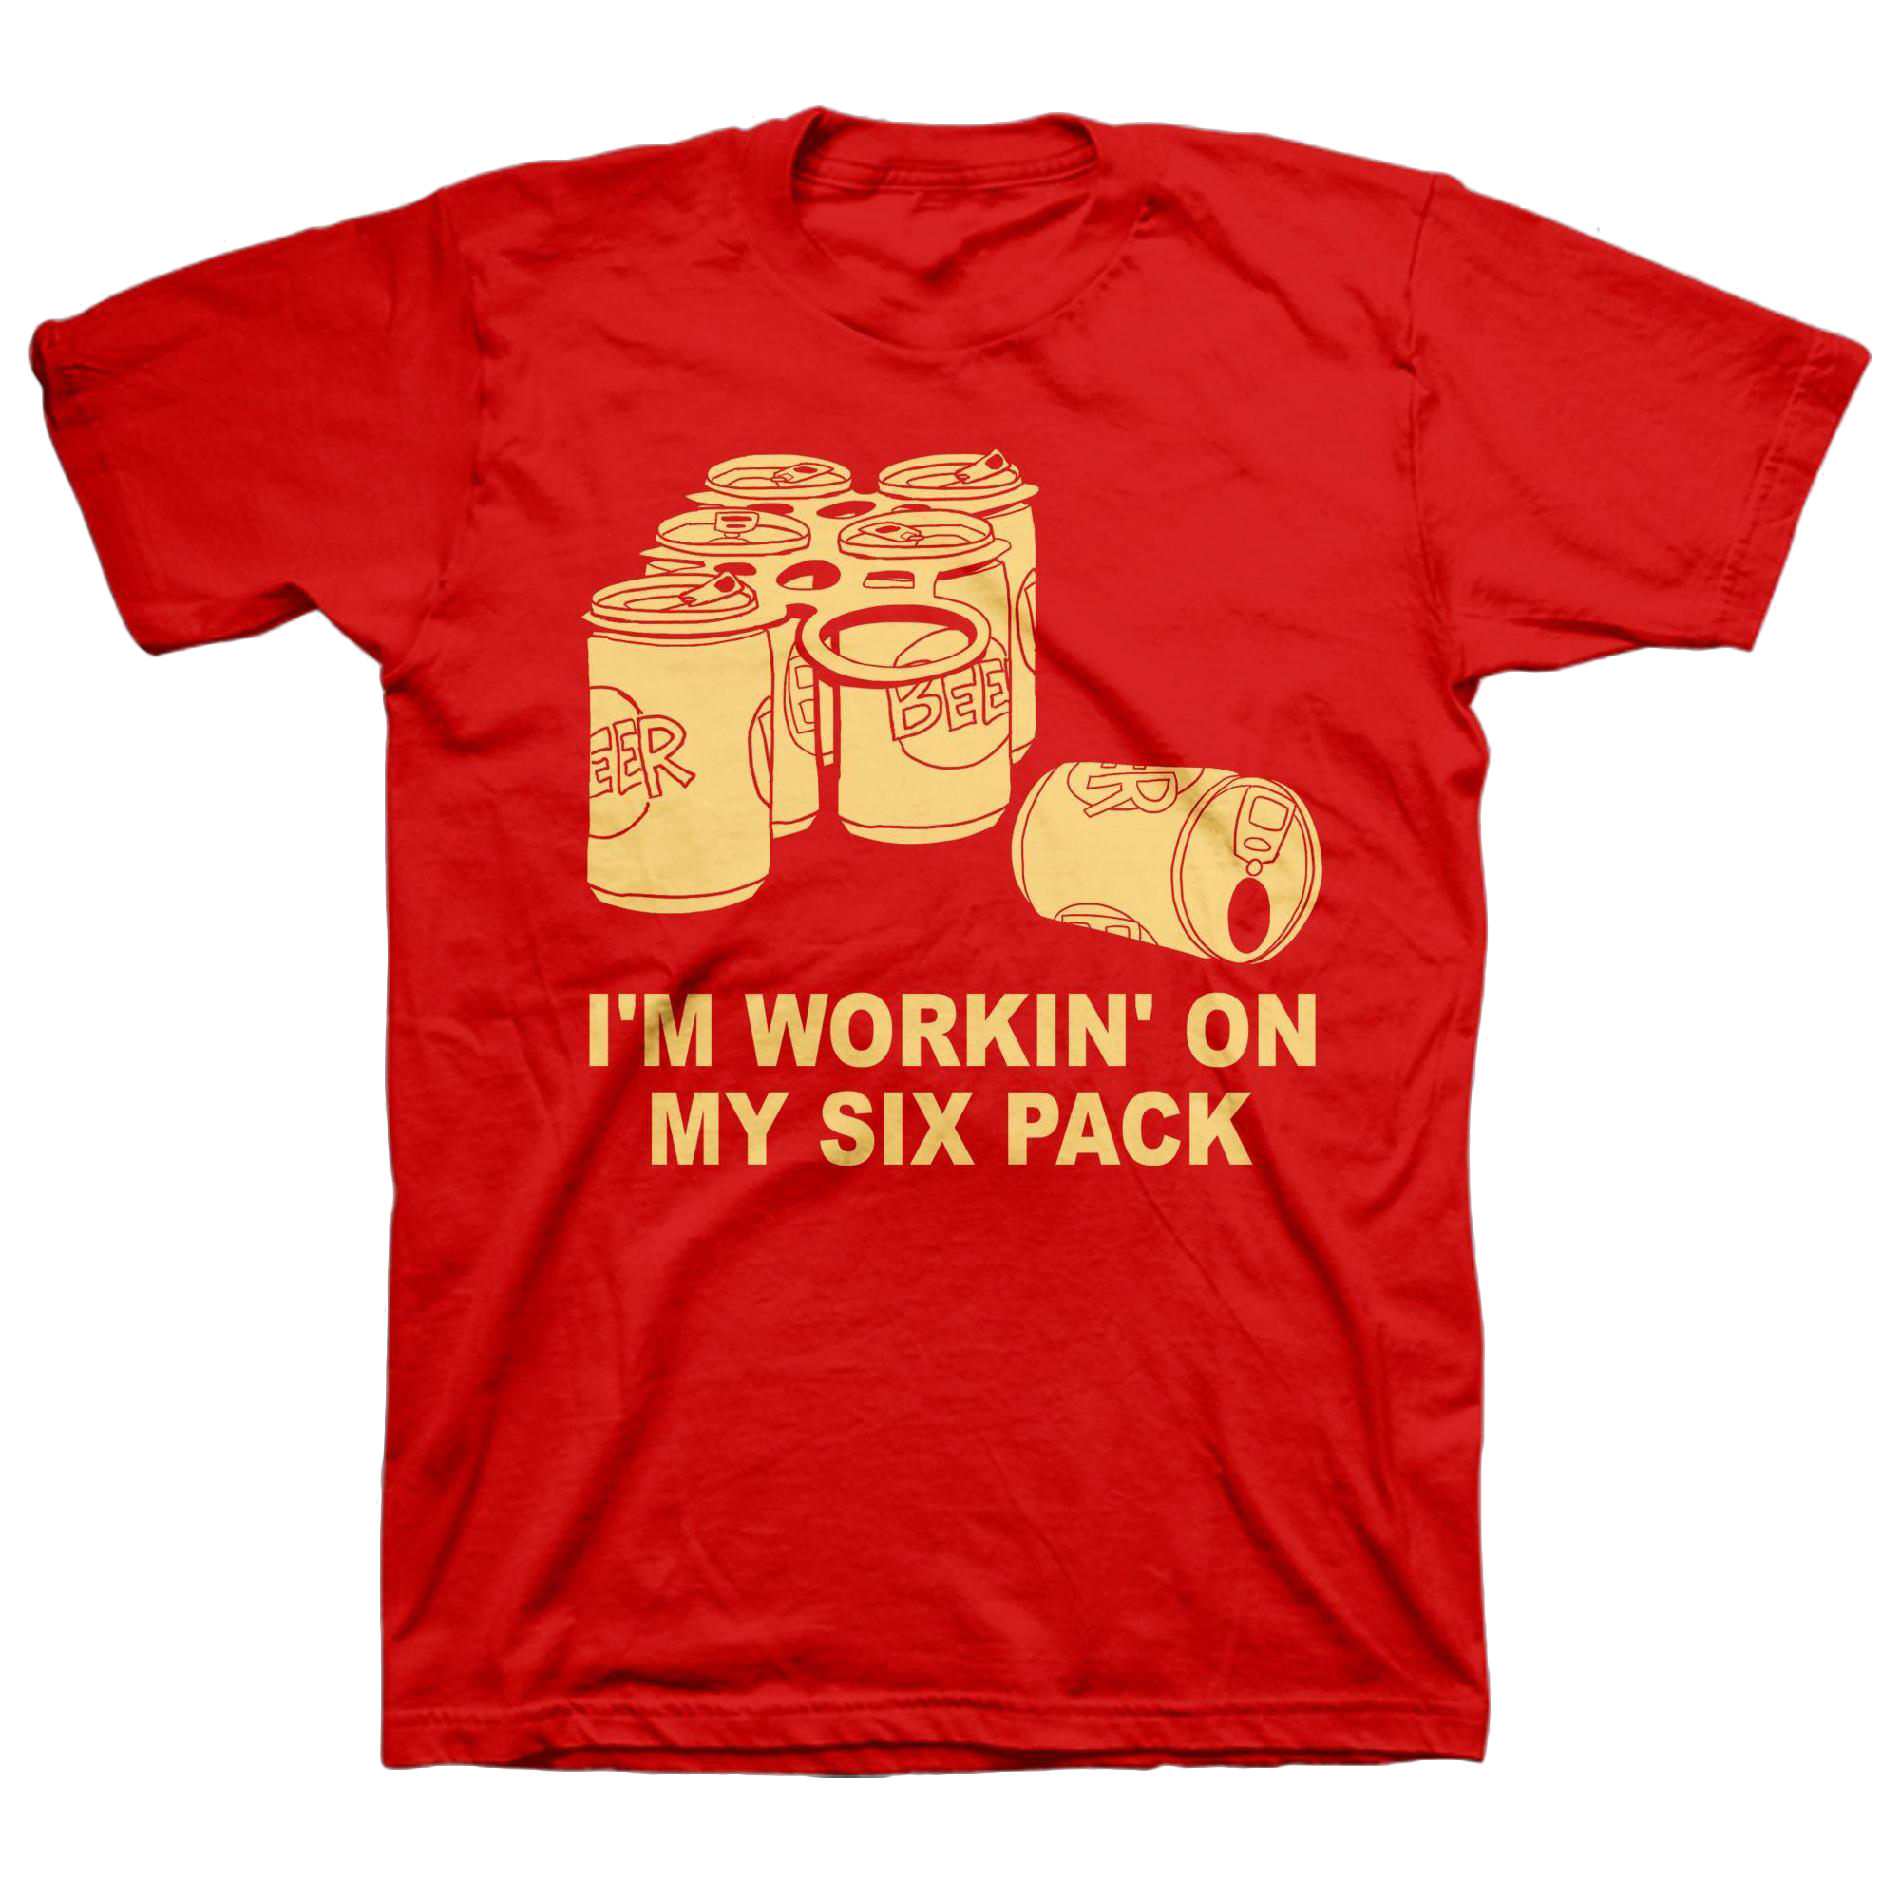 Men's Big & Tall Graphic T-Shirt - Six Pack